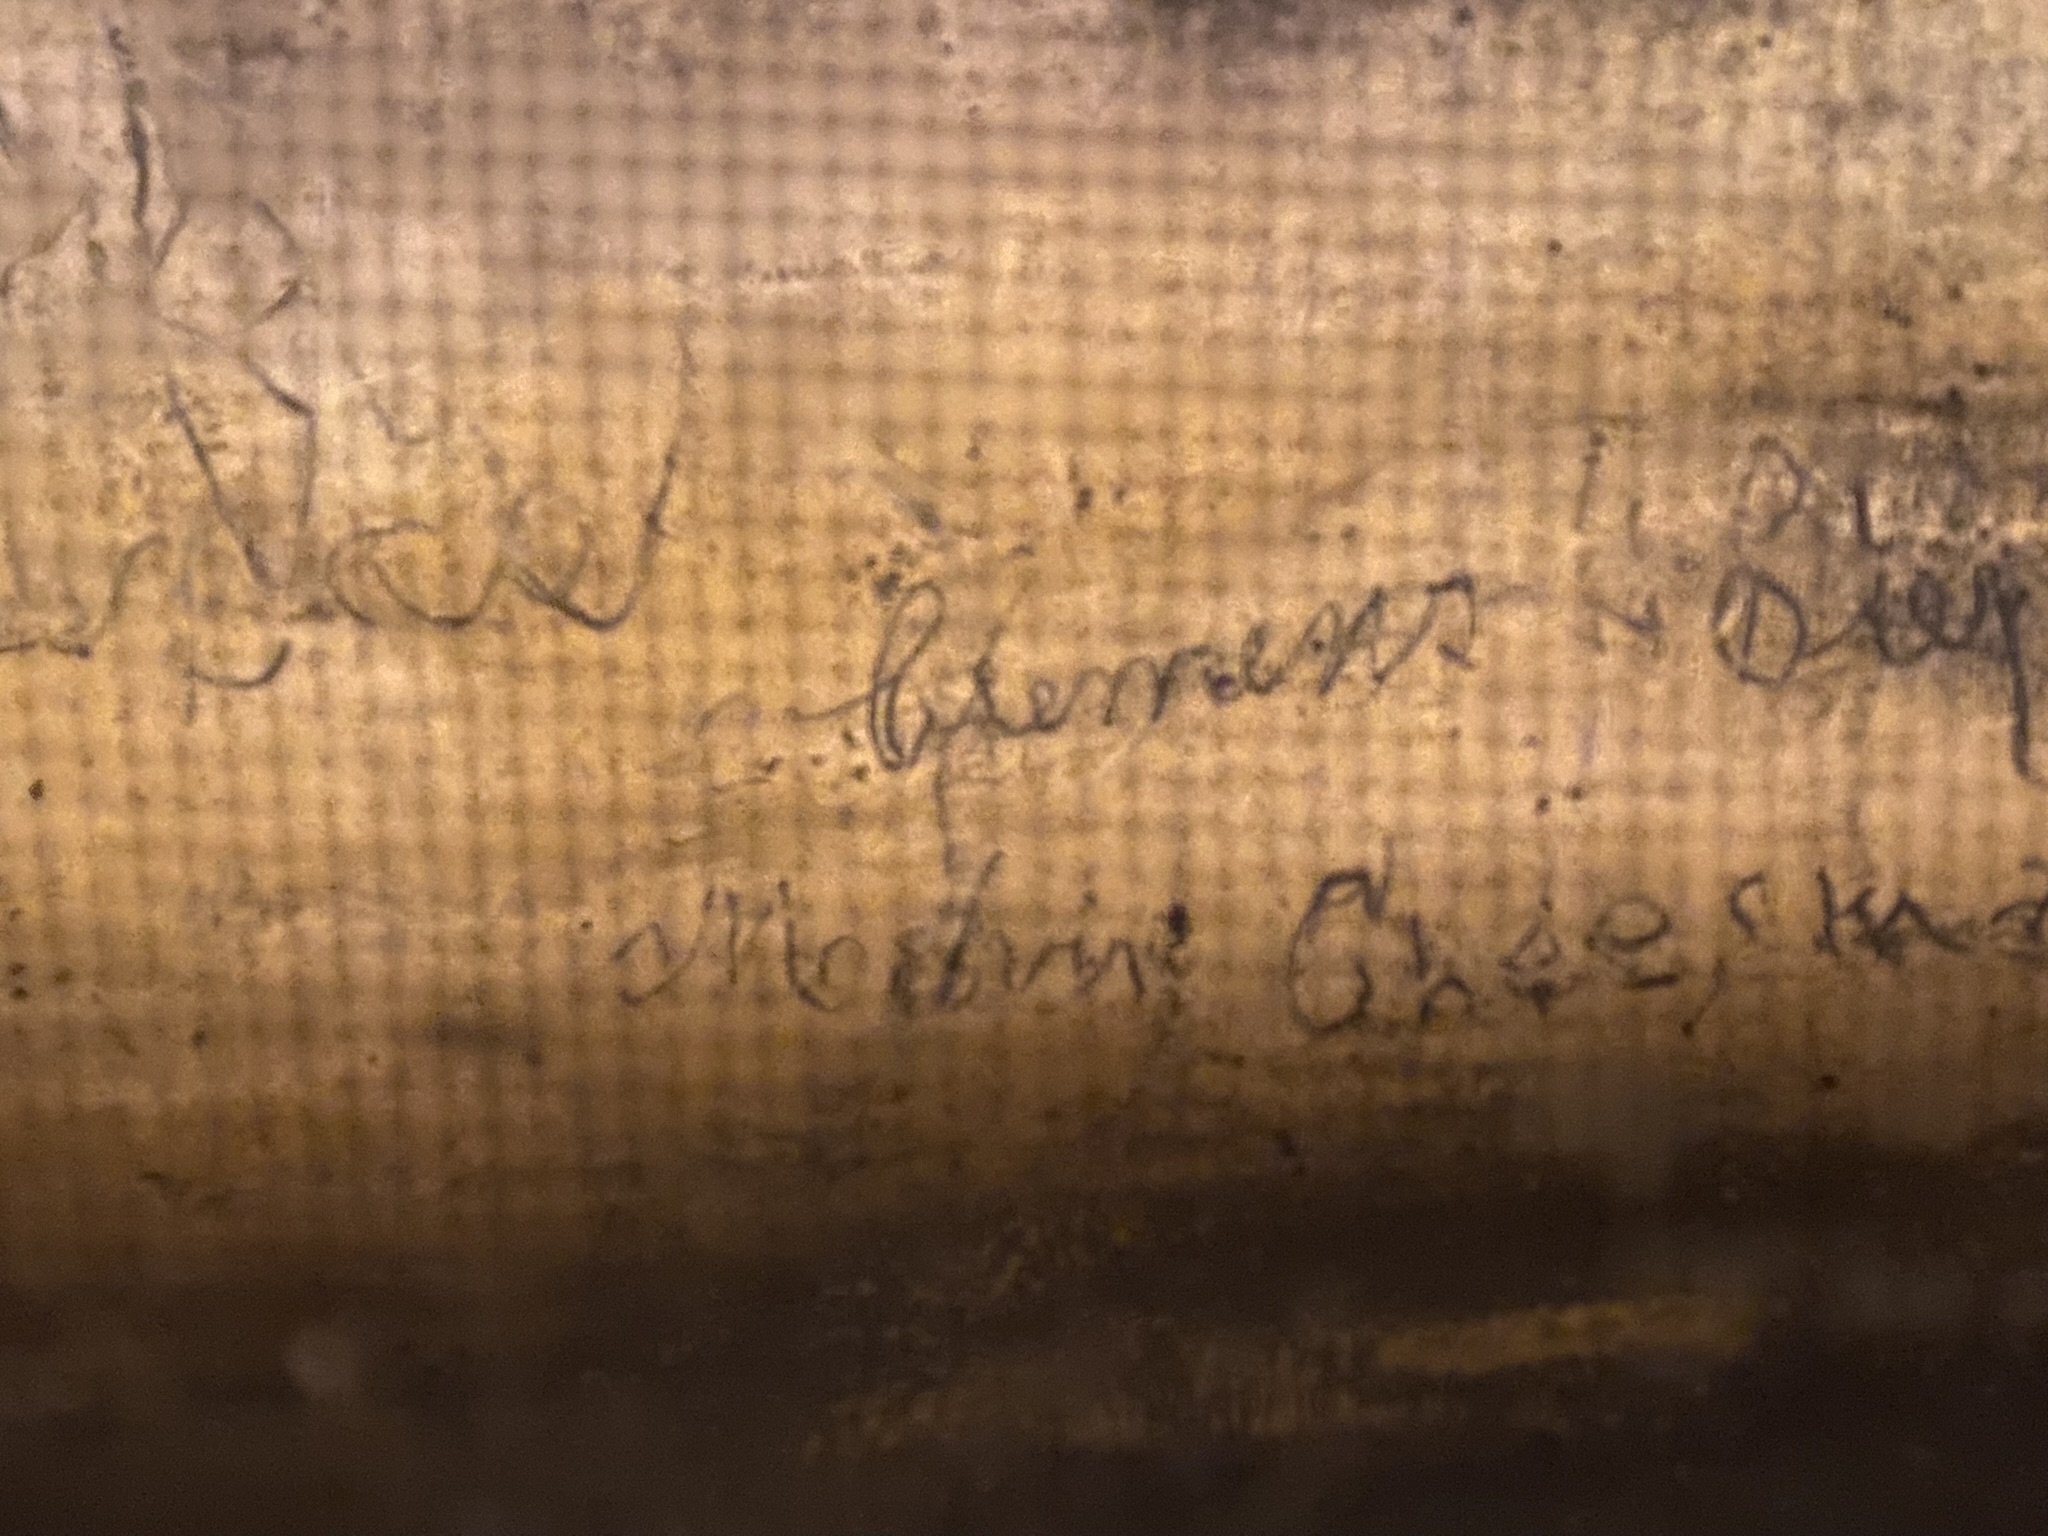 clemens' signature in Mark Twain's Cave 